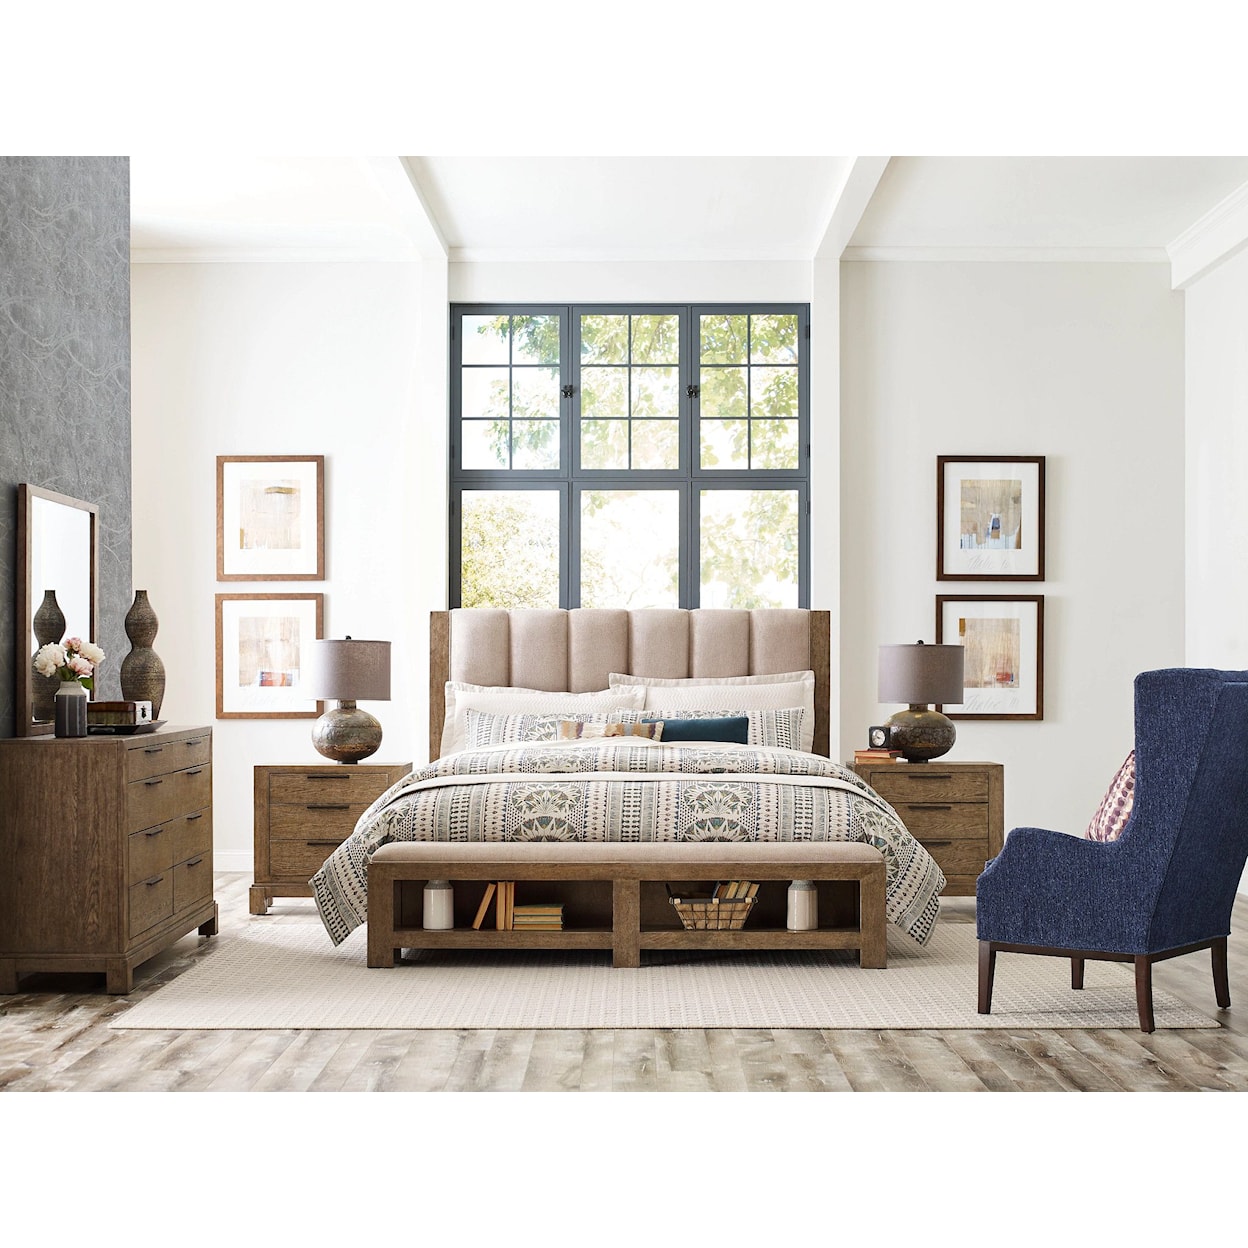 American Drew Skyline Queen Meadowood Upholstered Bed